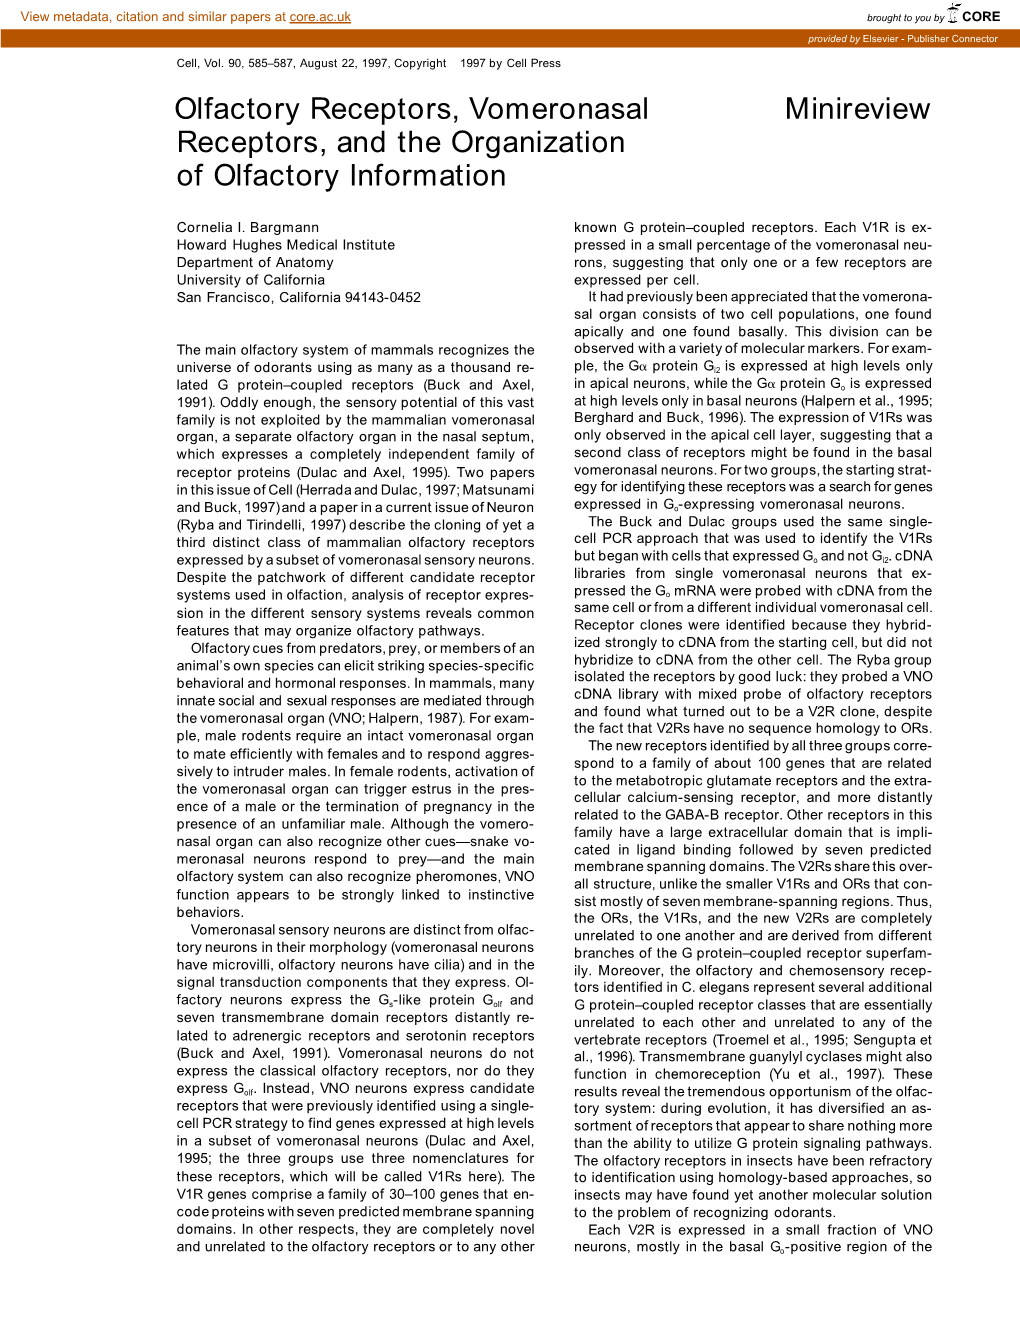 Olfactory Receptors, Vomeronasal Minireview Receptors, and the Organization of Olfactory Information